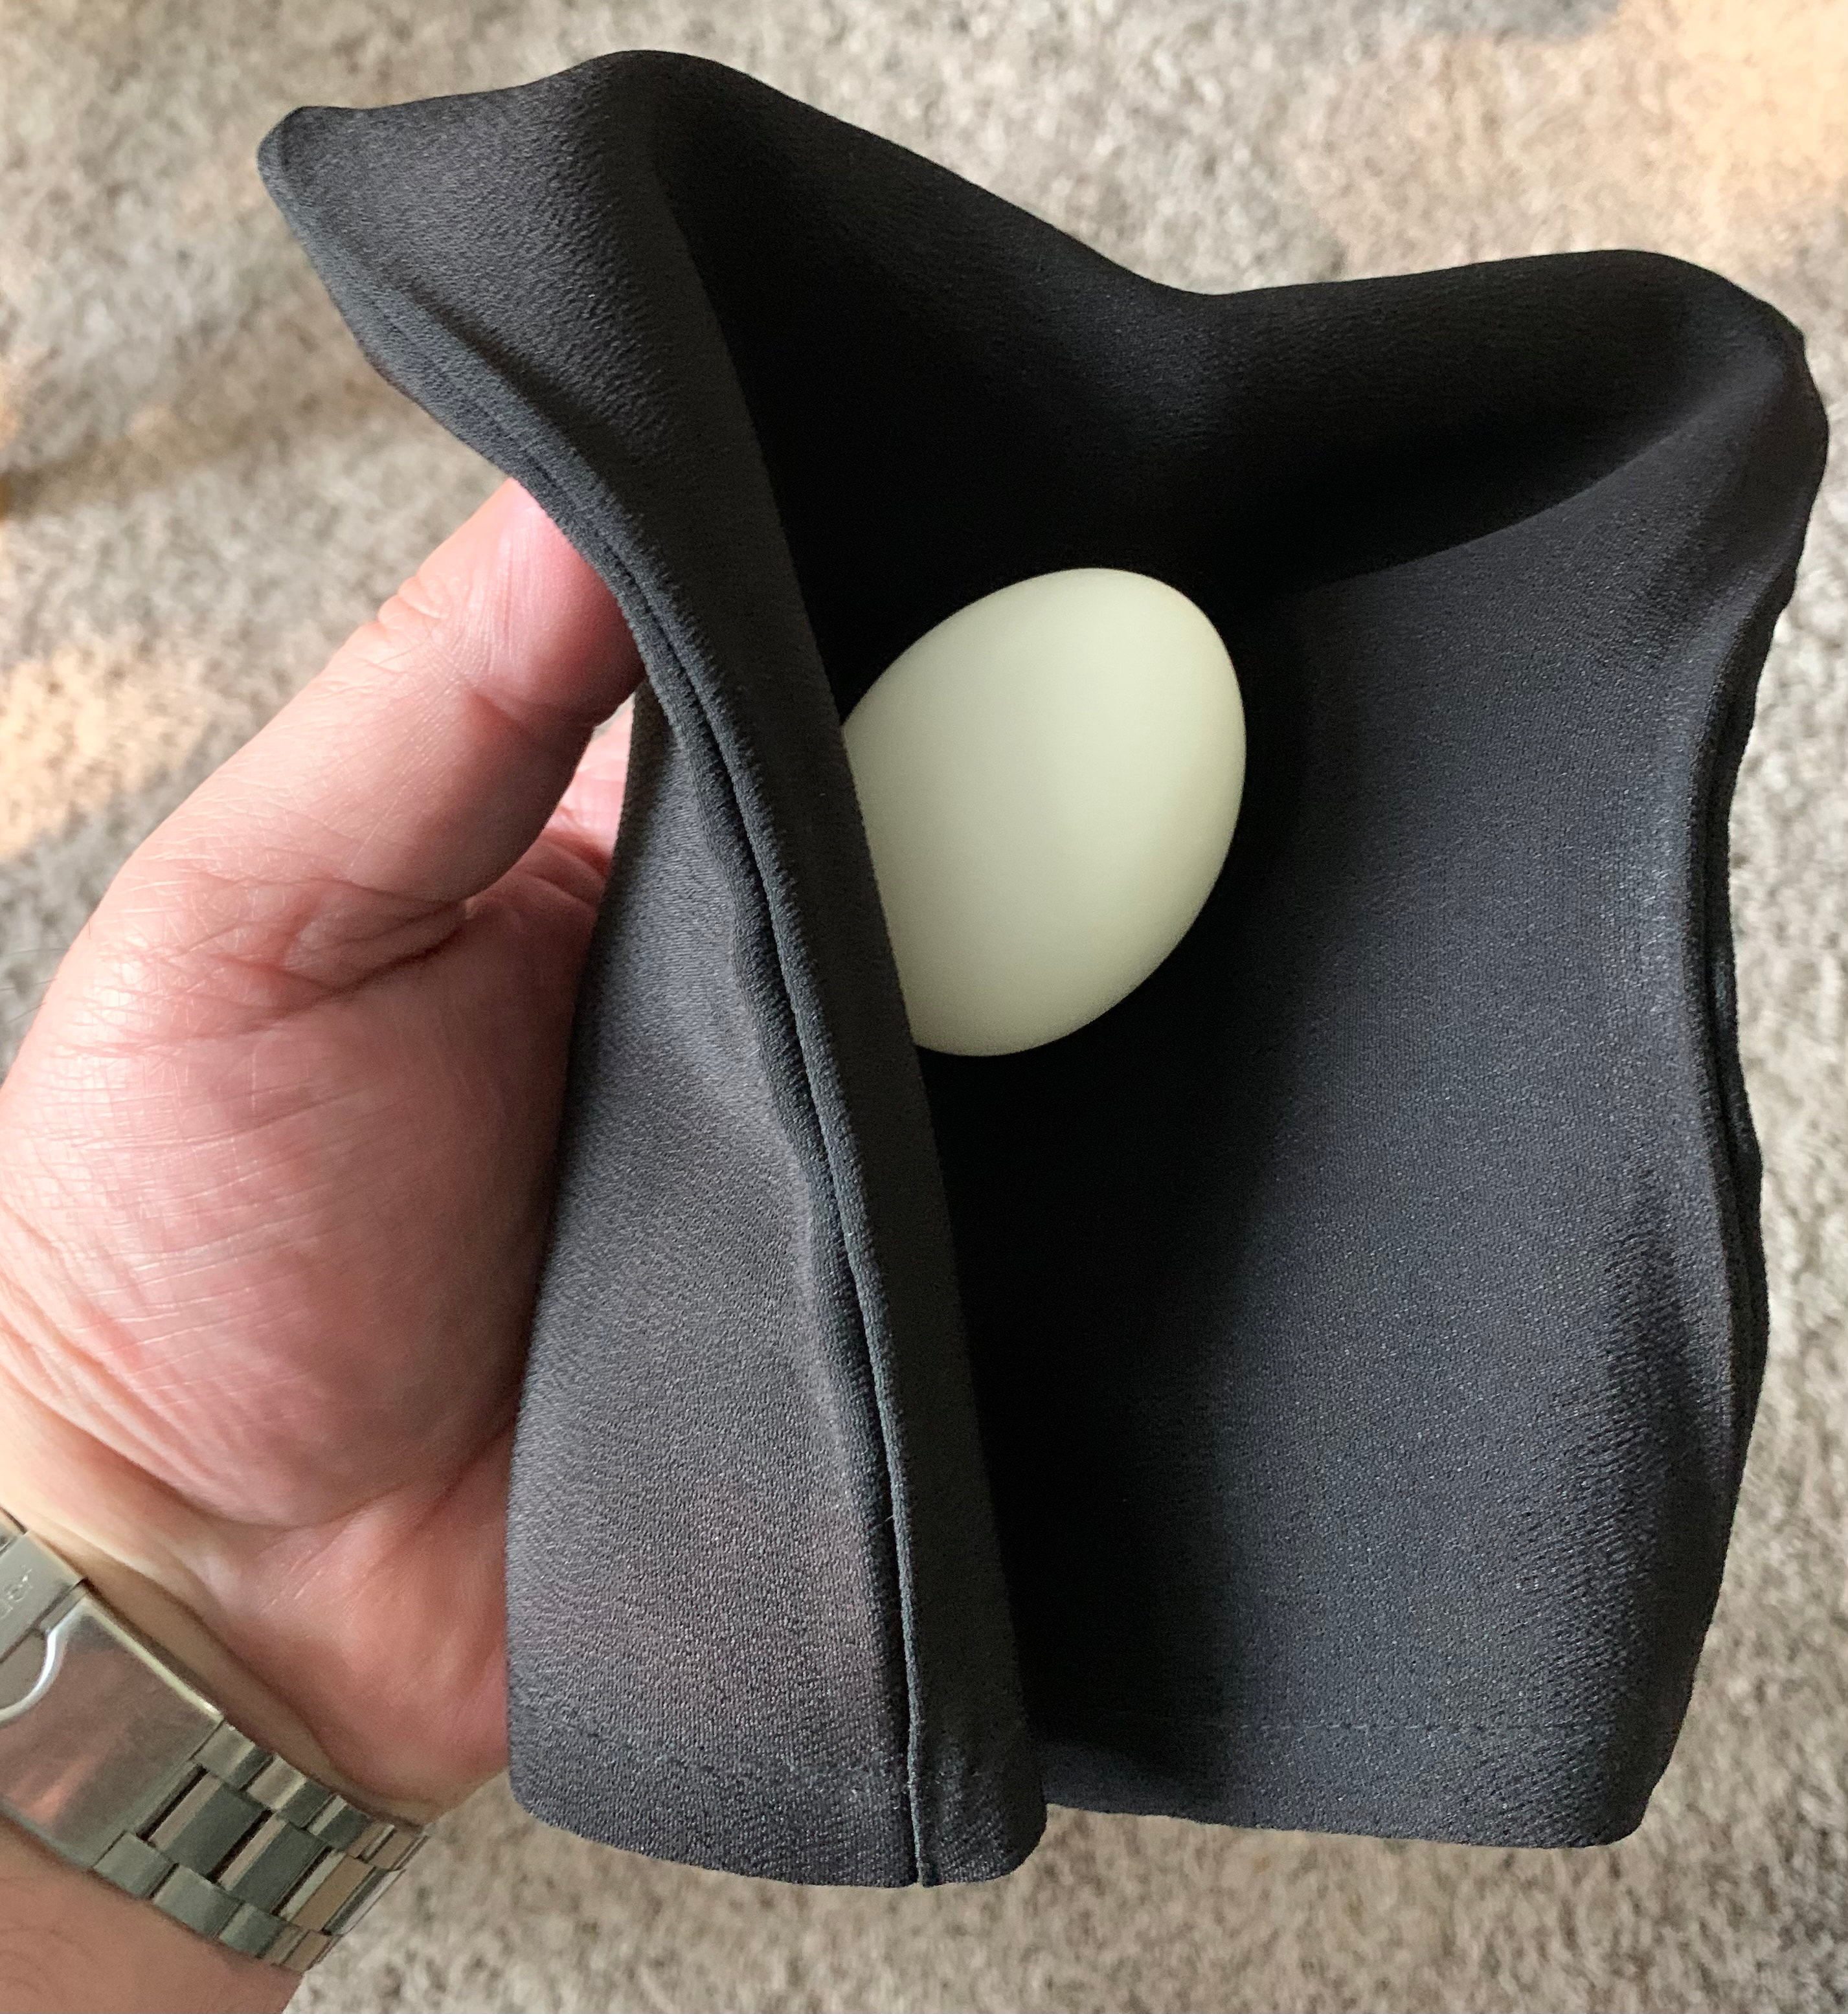 Fried Egg Golf & Shapland Elate Stand Golf Bag 2.0 - Rosemary